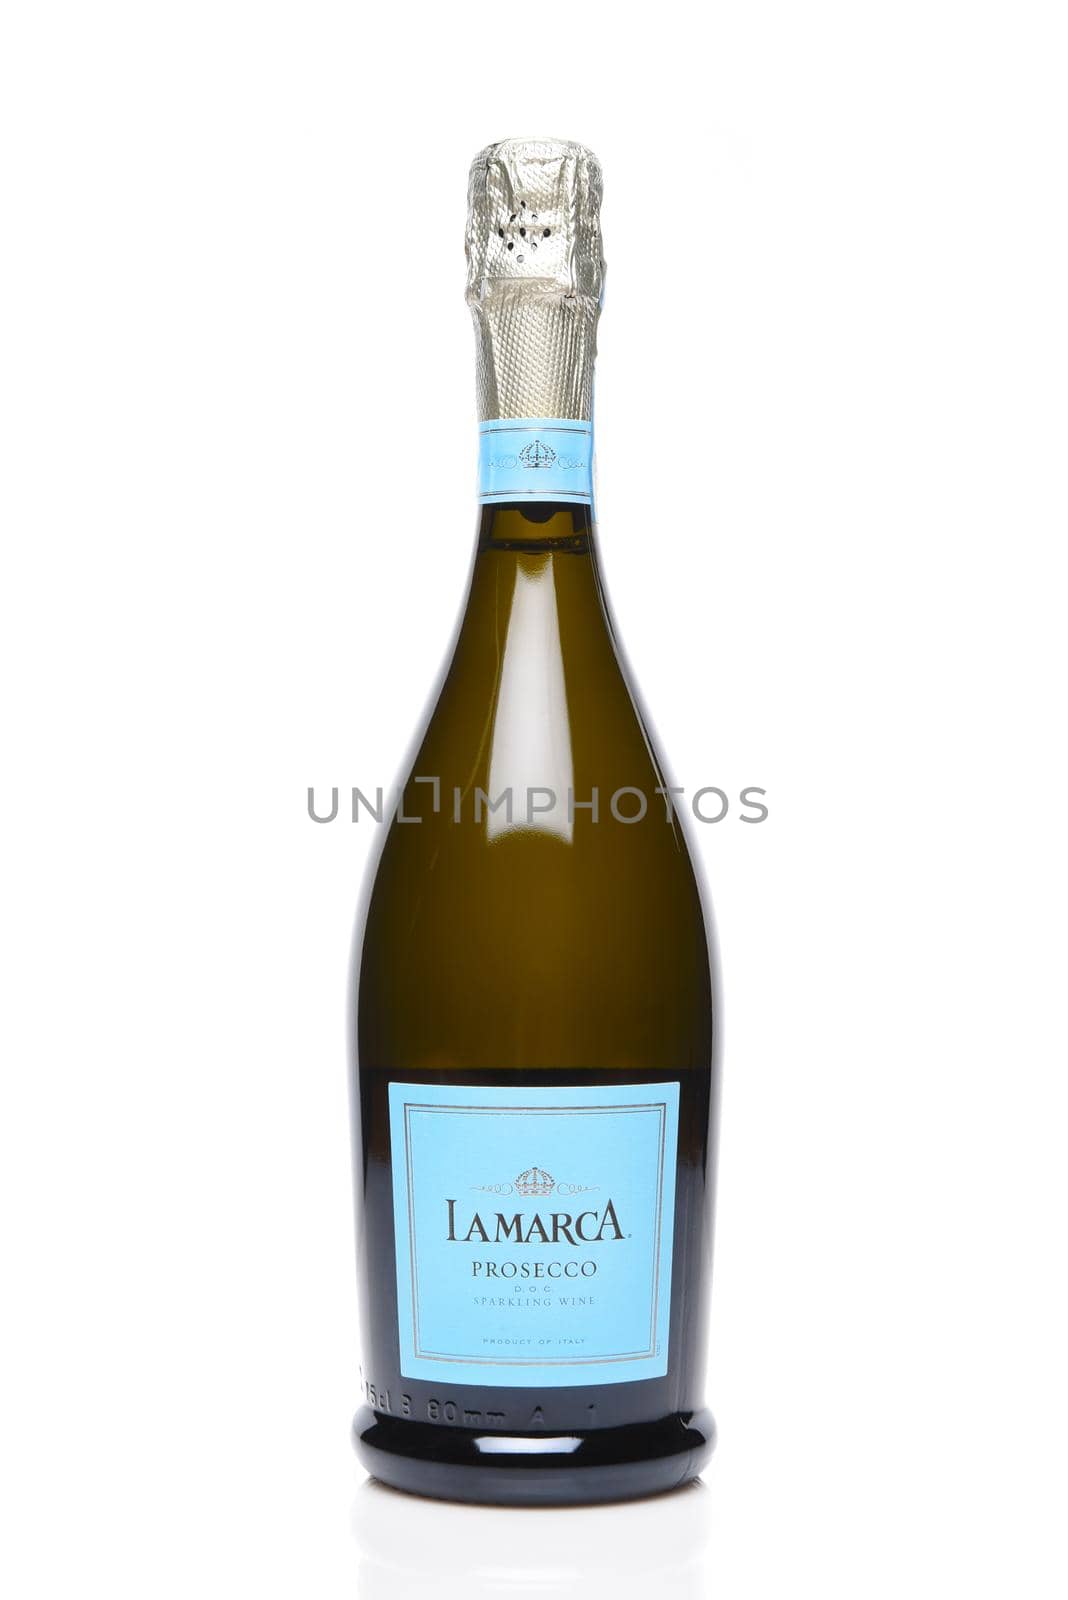 LaMarca Prosecco a sparkling wine from Italy by sCukrov